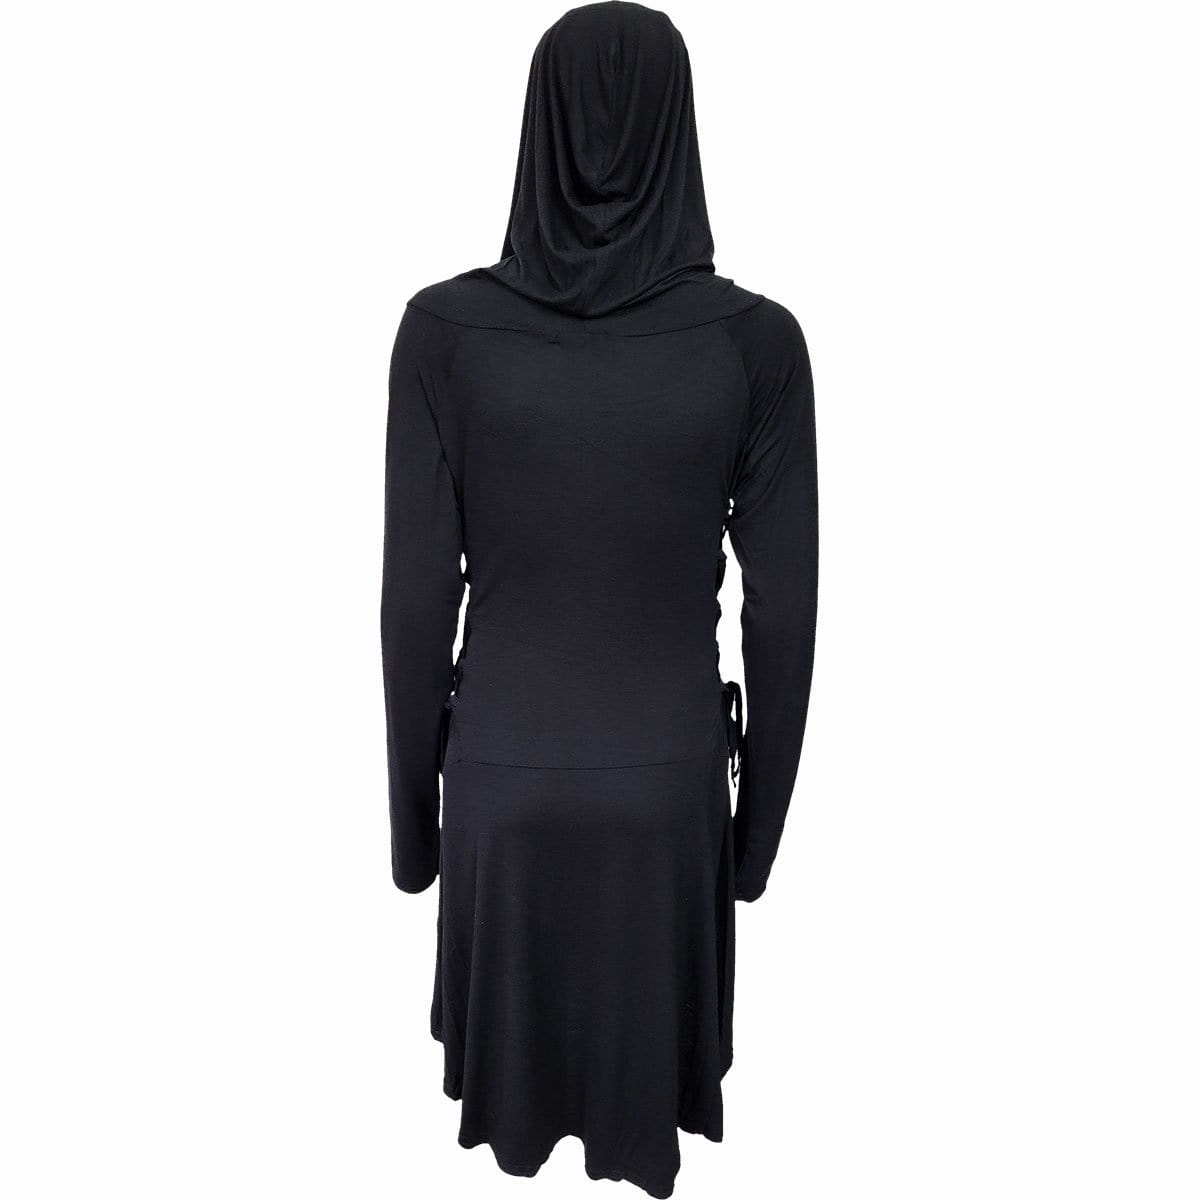 GOTHIC ELEGANCE - Black Widow Gothic Hooded Dress - Spiral USA